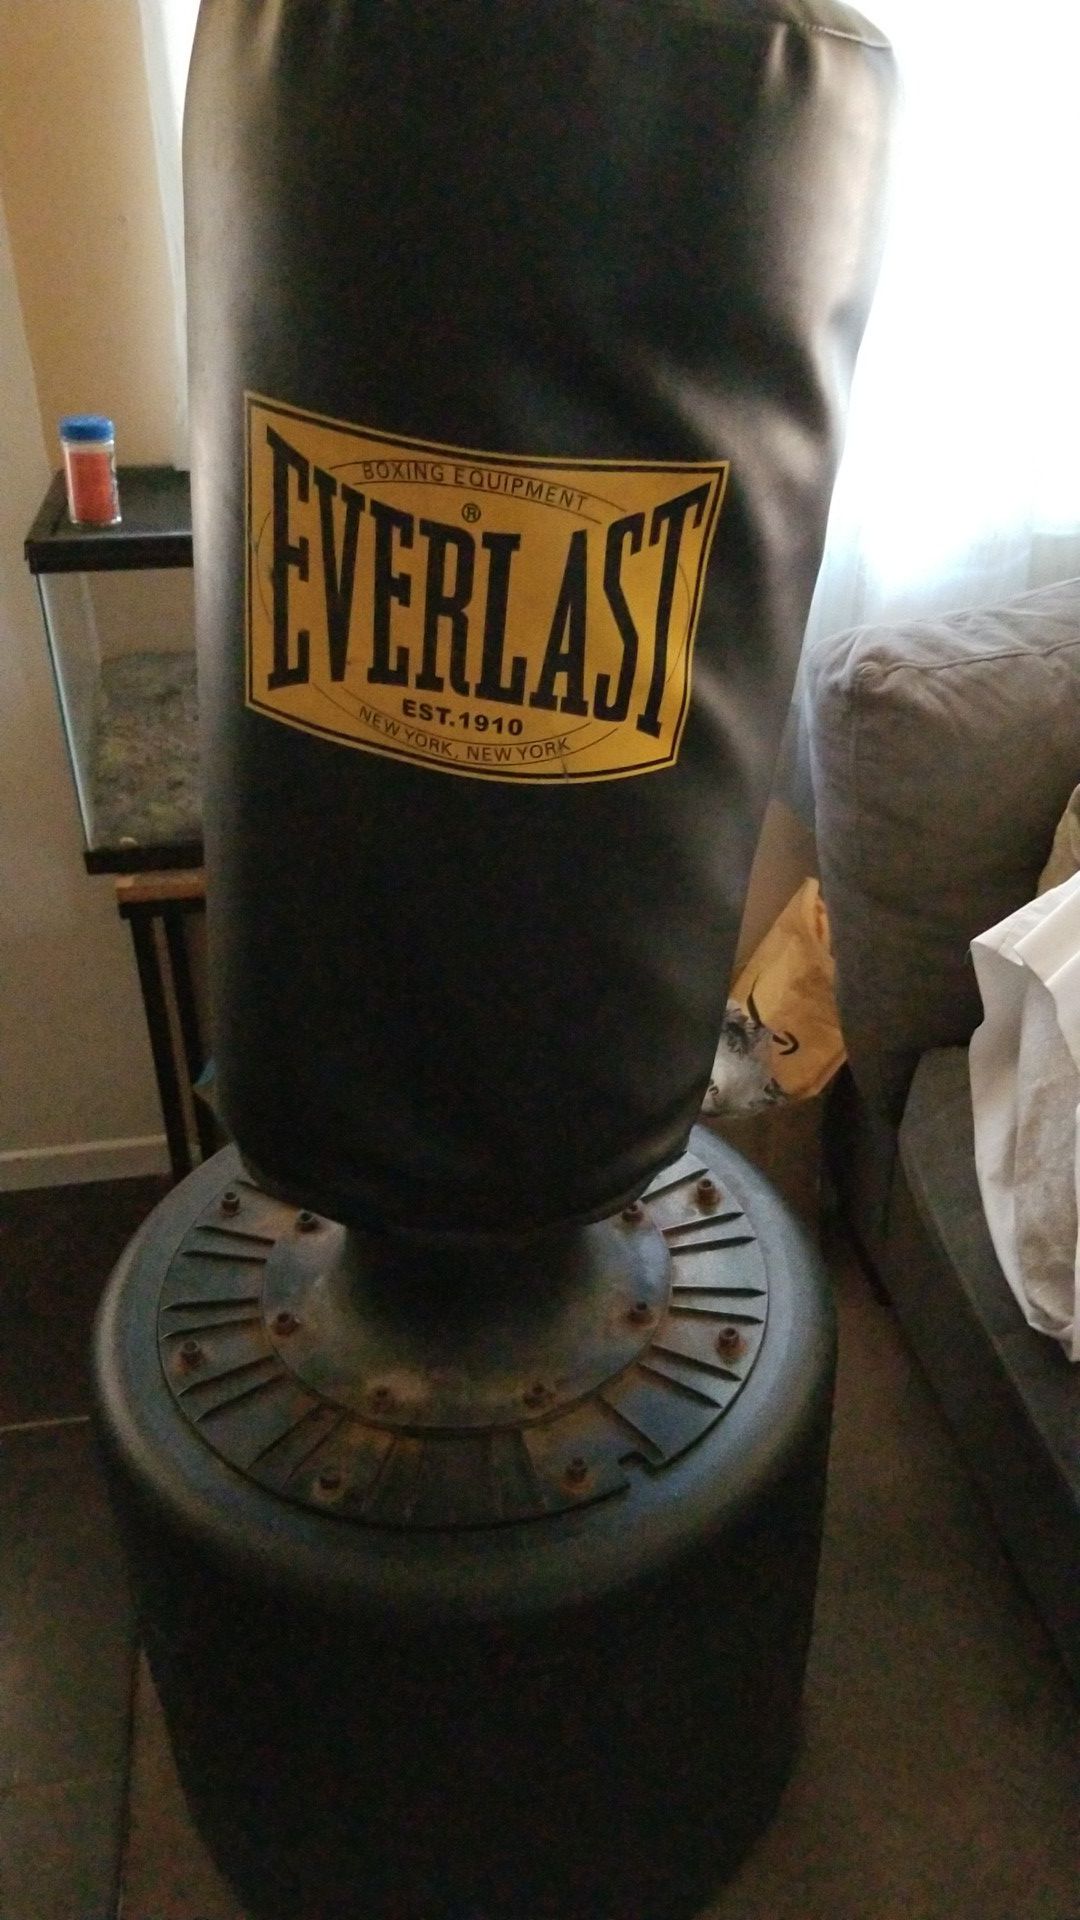 Free Everlast punching bag